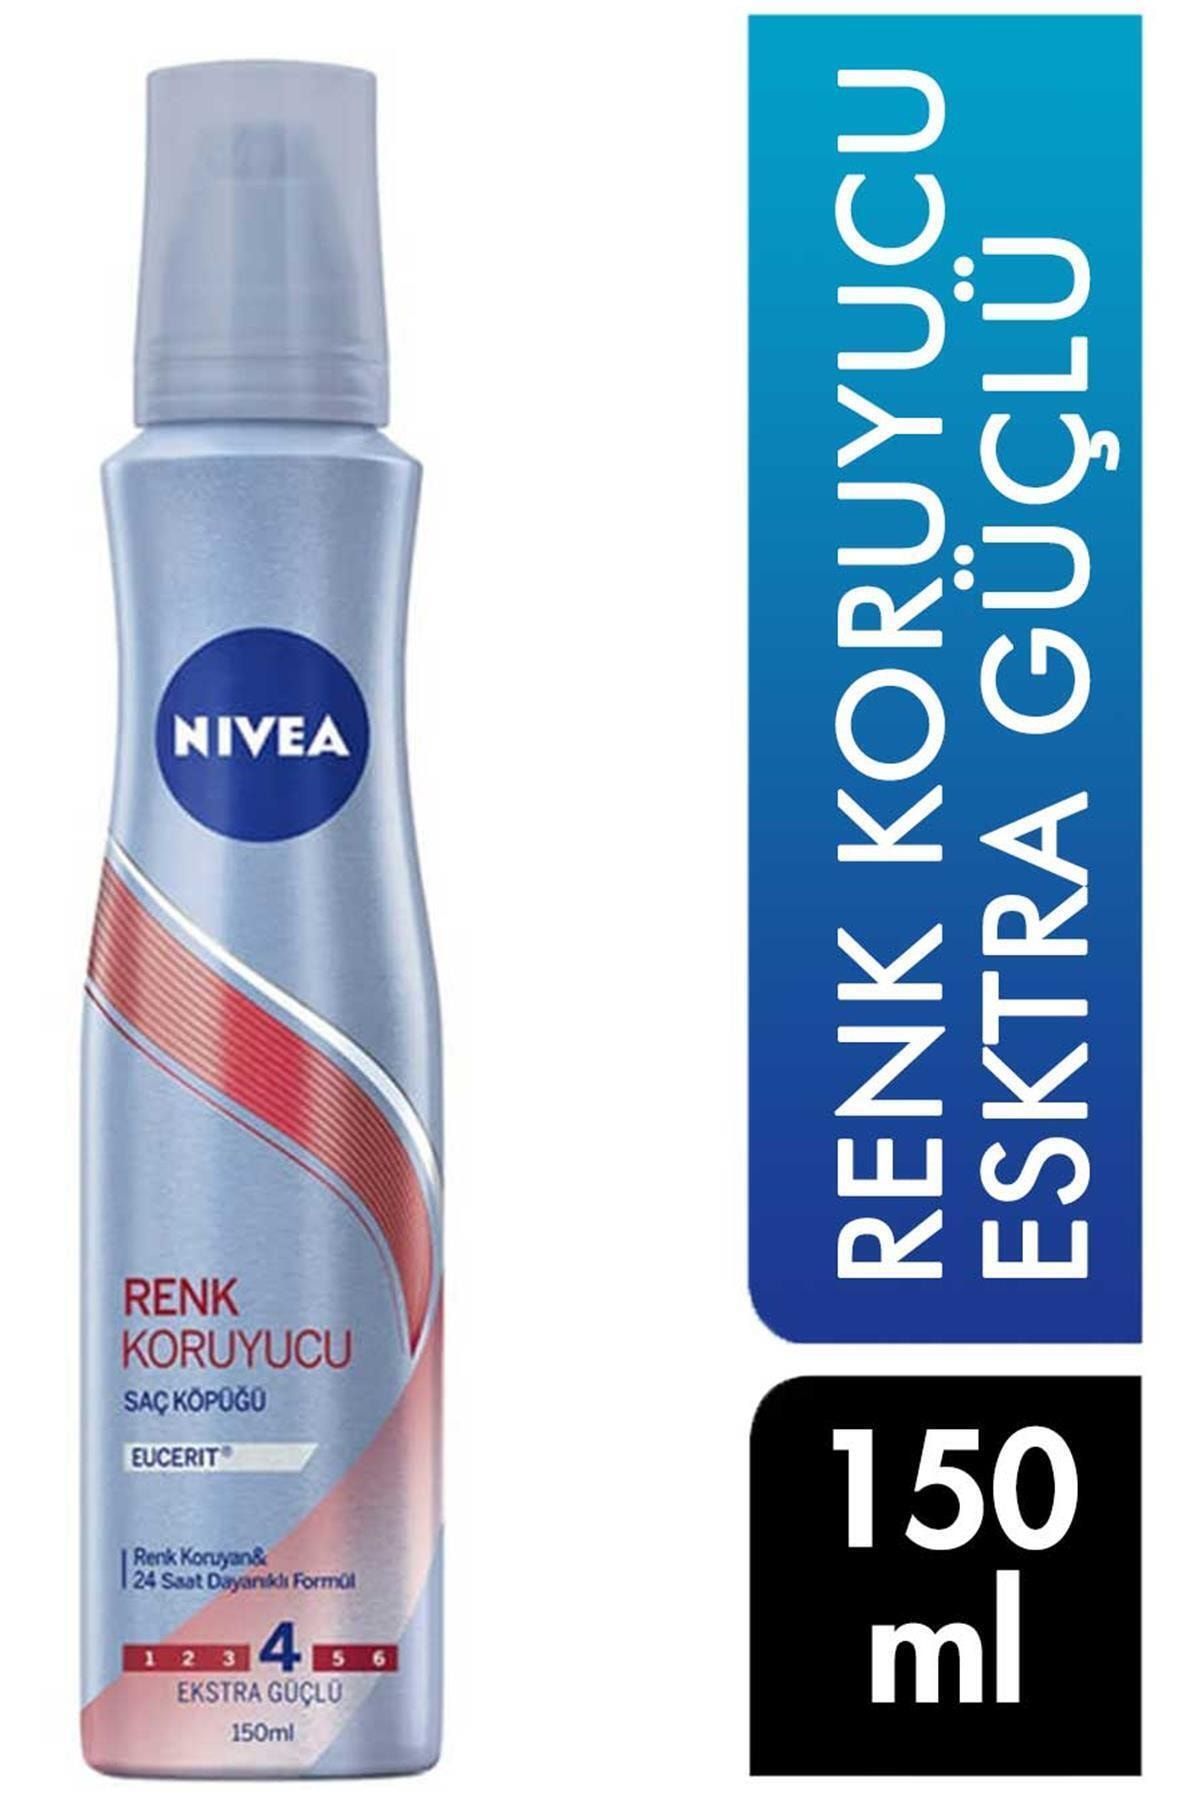 NIVEA Marka: Renk Koruyucu Saç Köpüğü 150 ml Esktra Güçlü 4 4005900446114